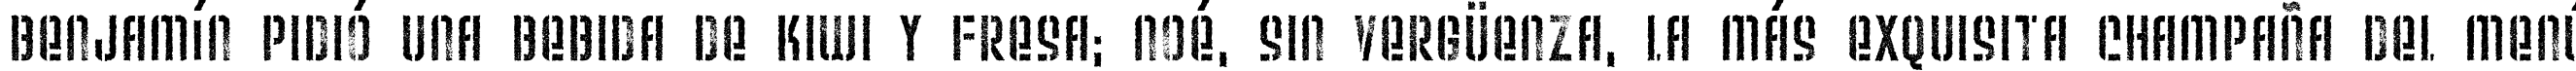 Пример написания шрифтом Weltron Urban текста на испанском